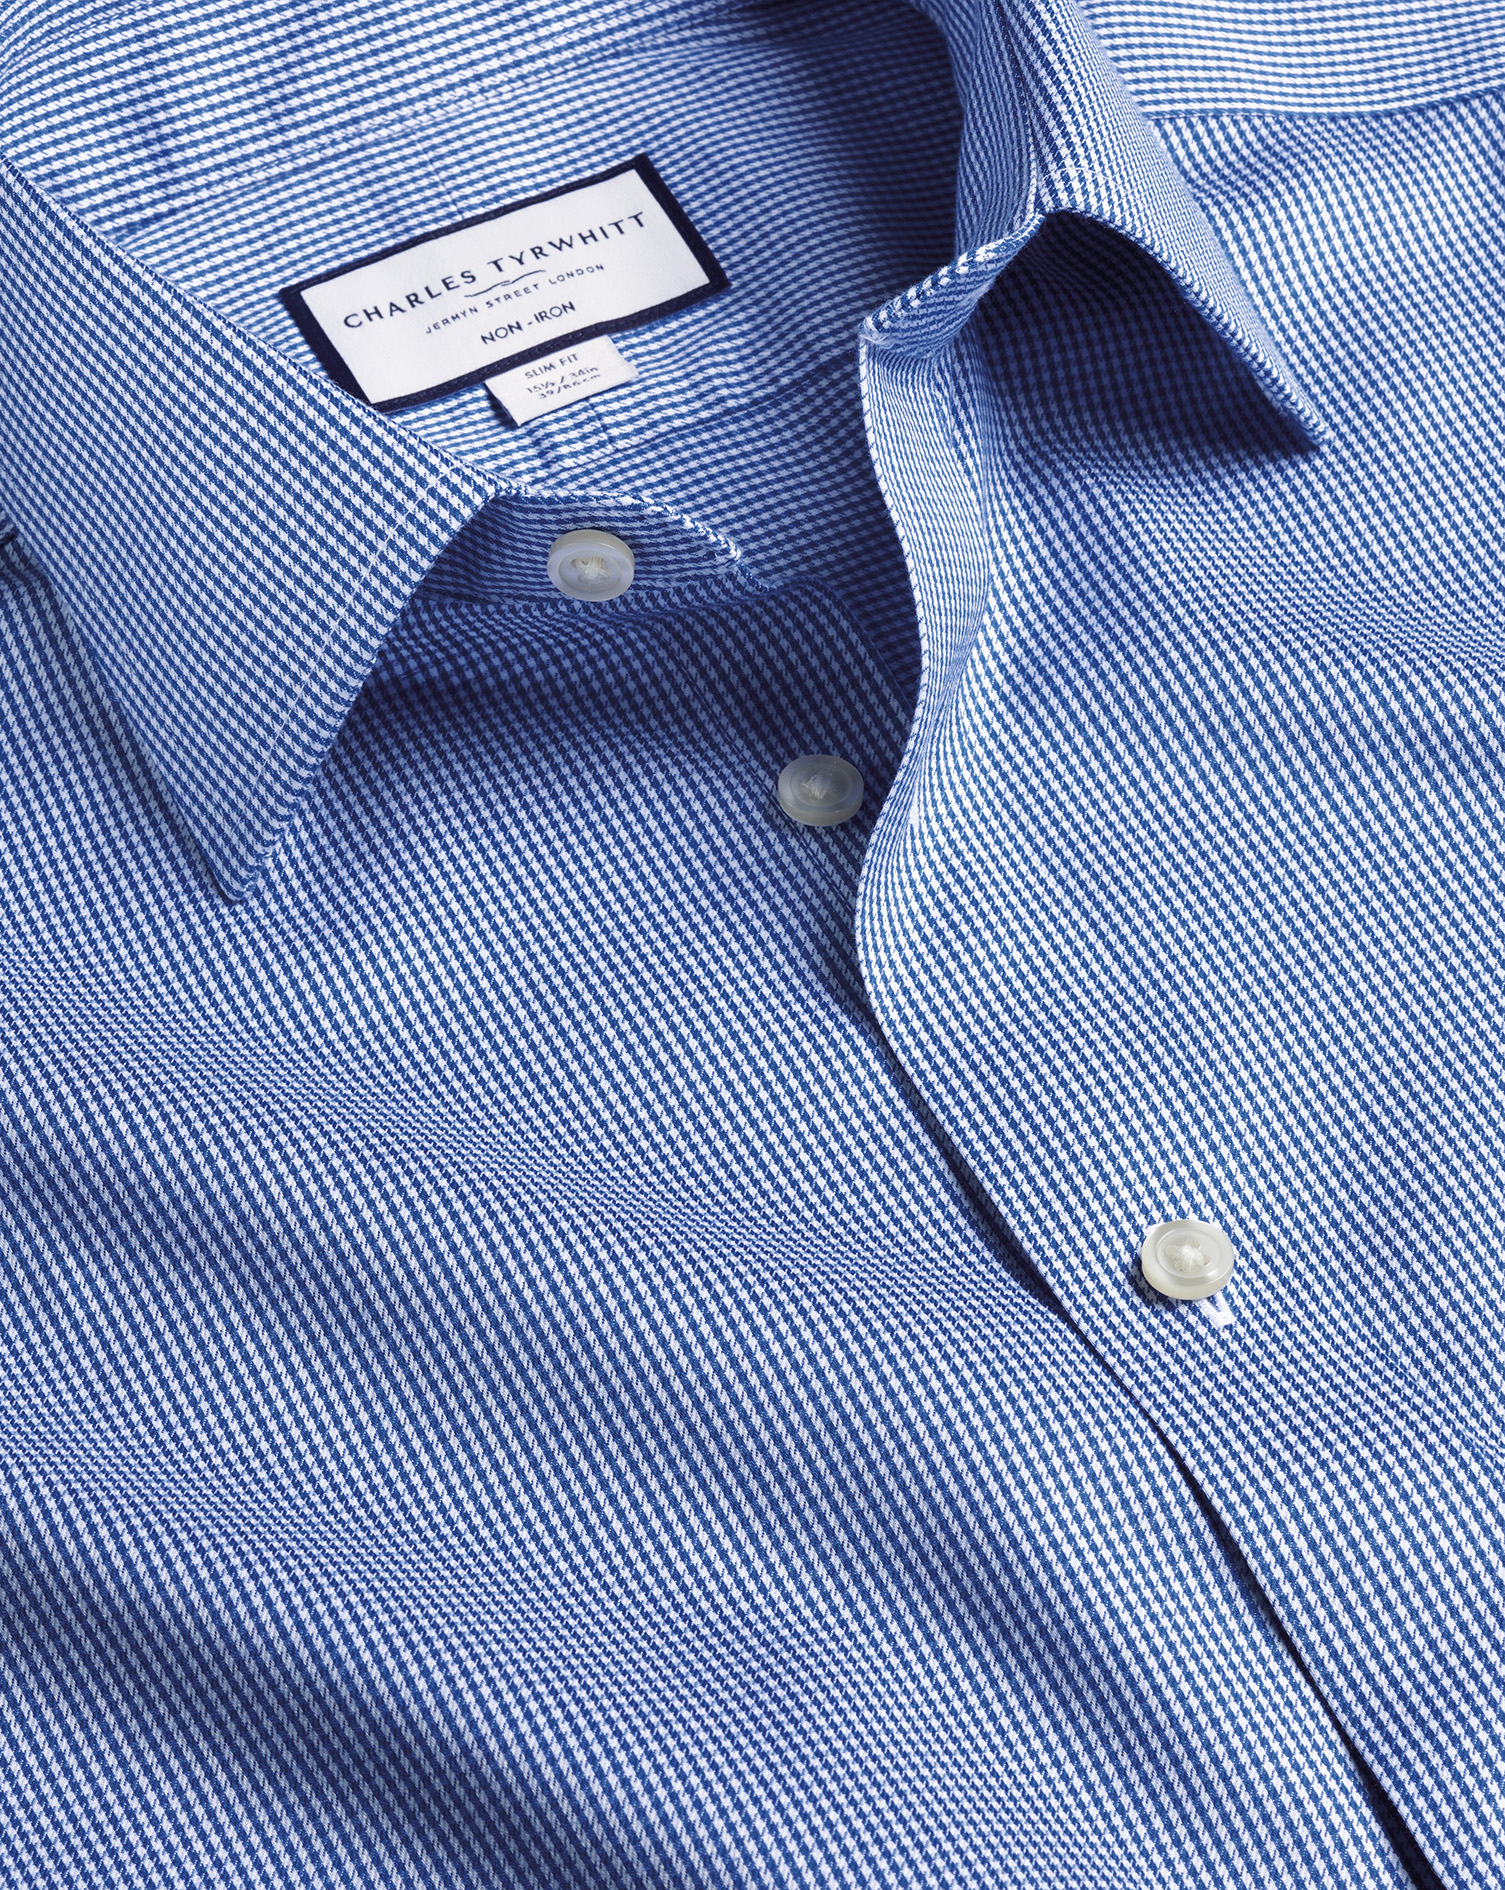 Men's Charles Tyrwhitt Non-Iron Puppytooth Dress Shirt - Royal Blue Single Cuff Size Large Cotton
